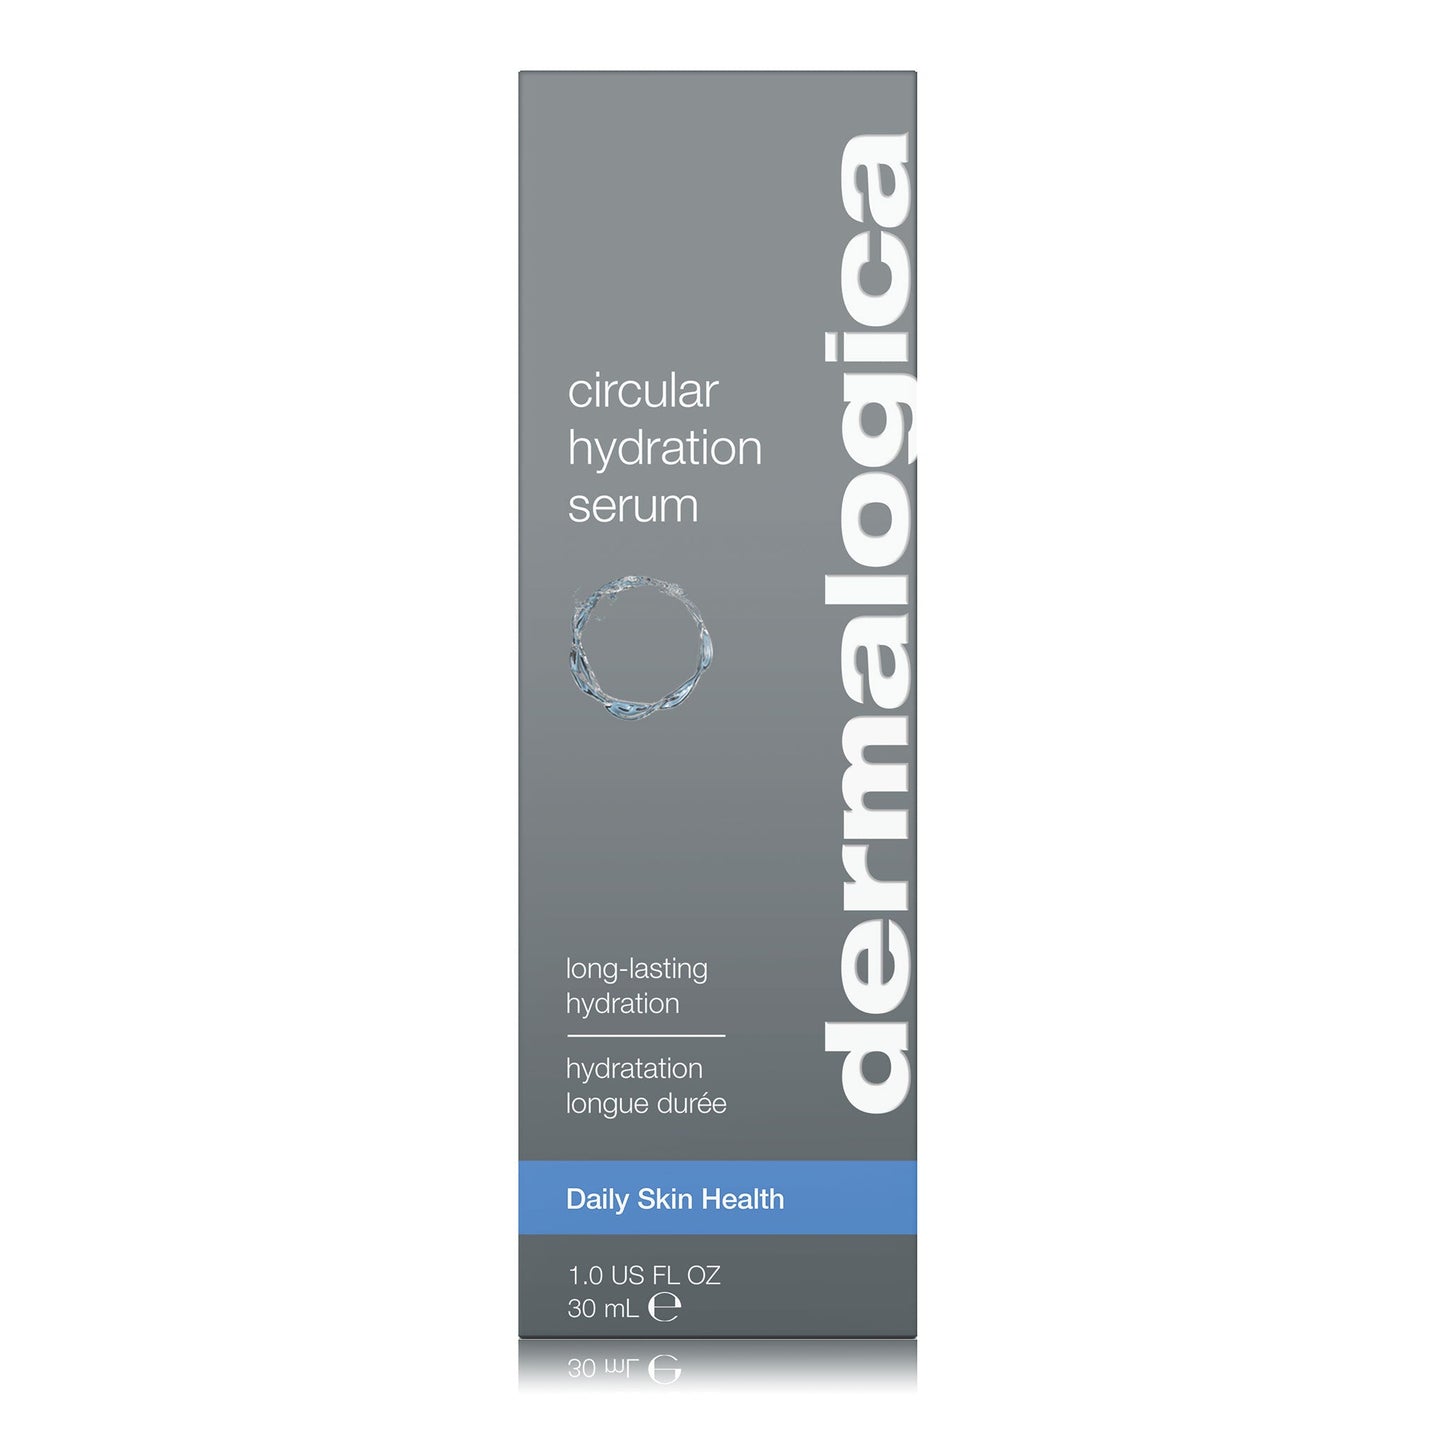 circular hydration serum carton